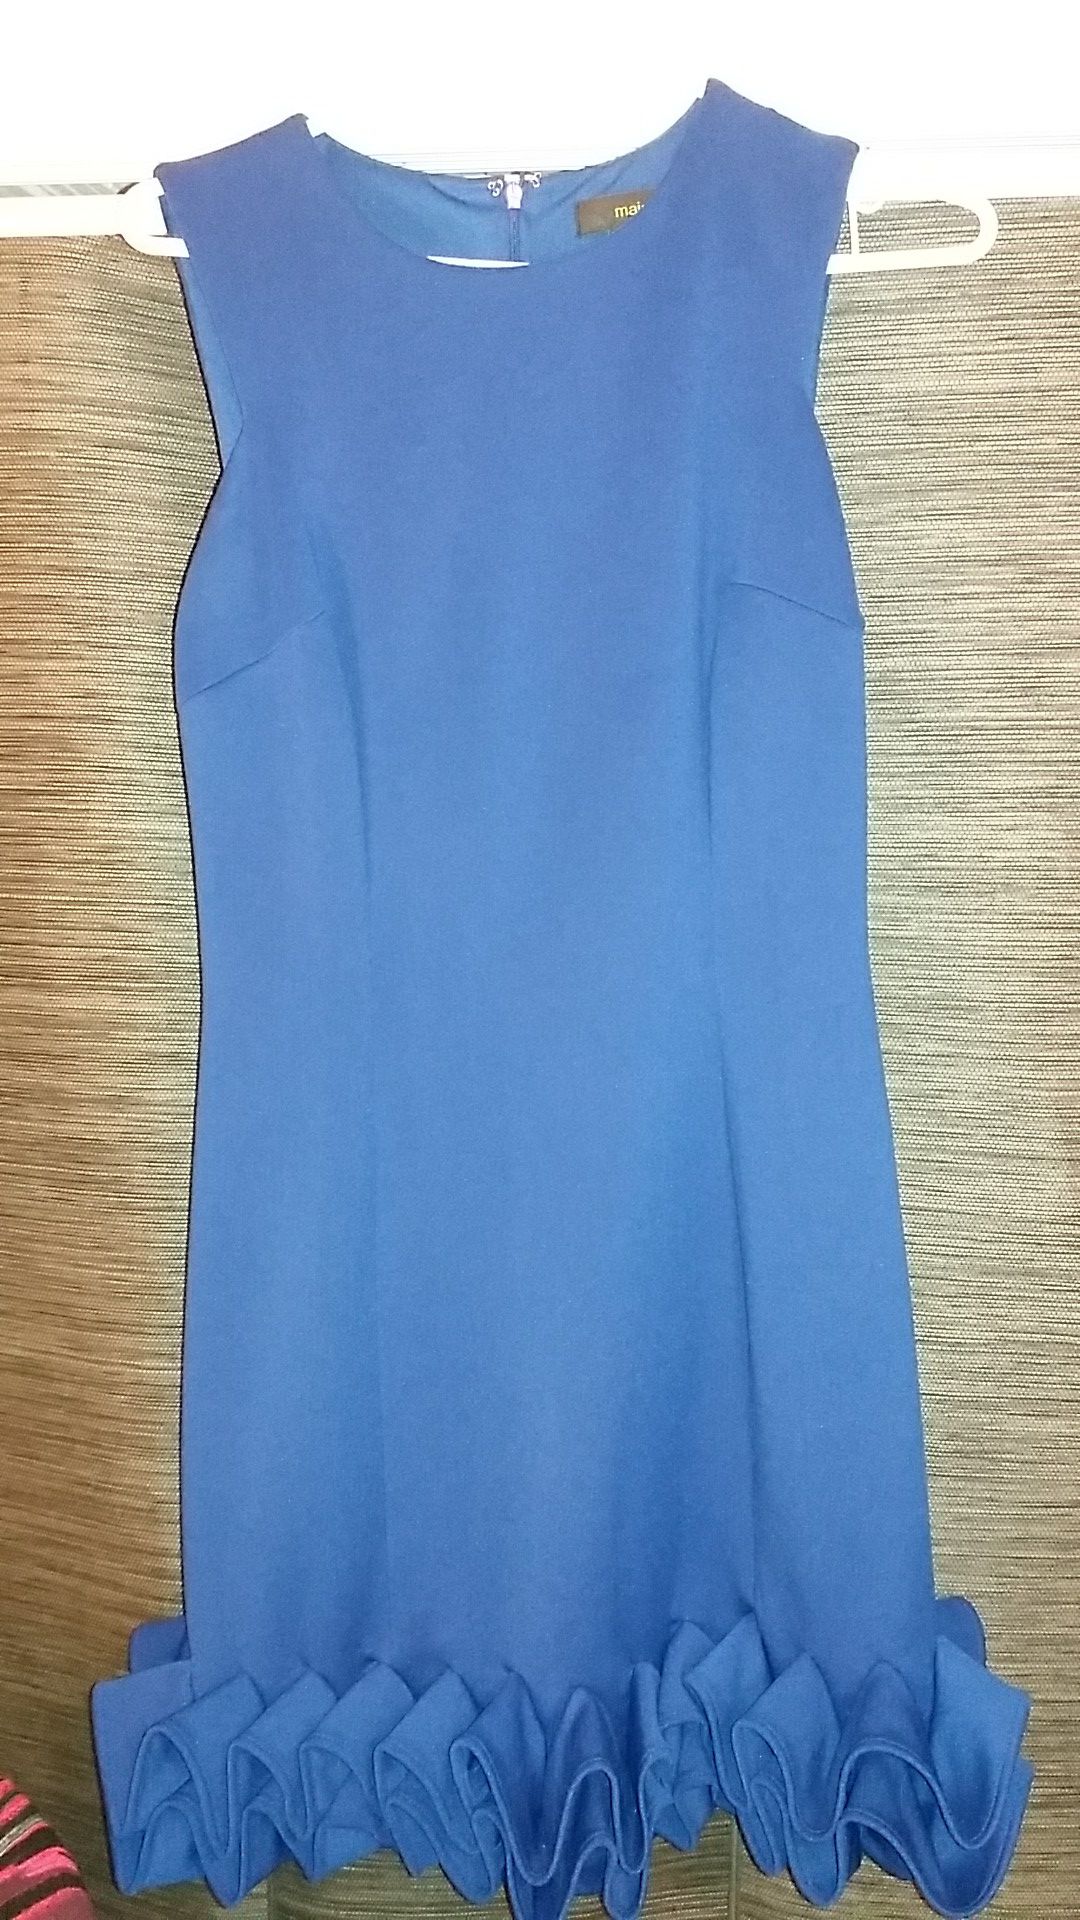 (PENDING PICK UP) Free Maia size 6 blue dress